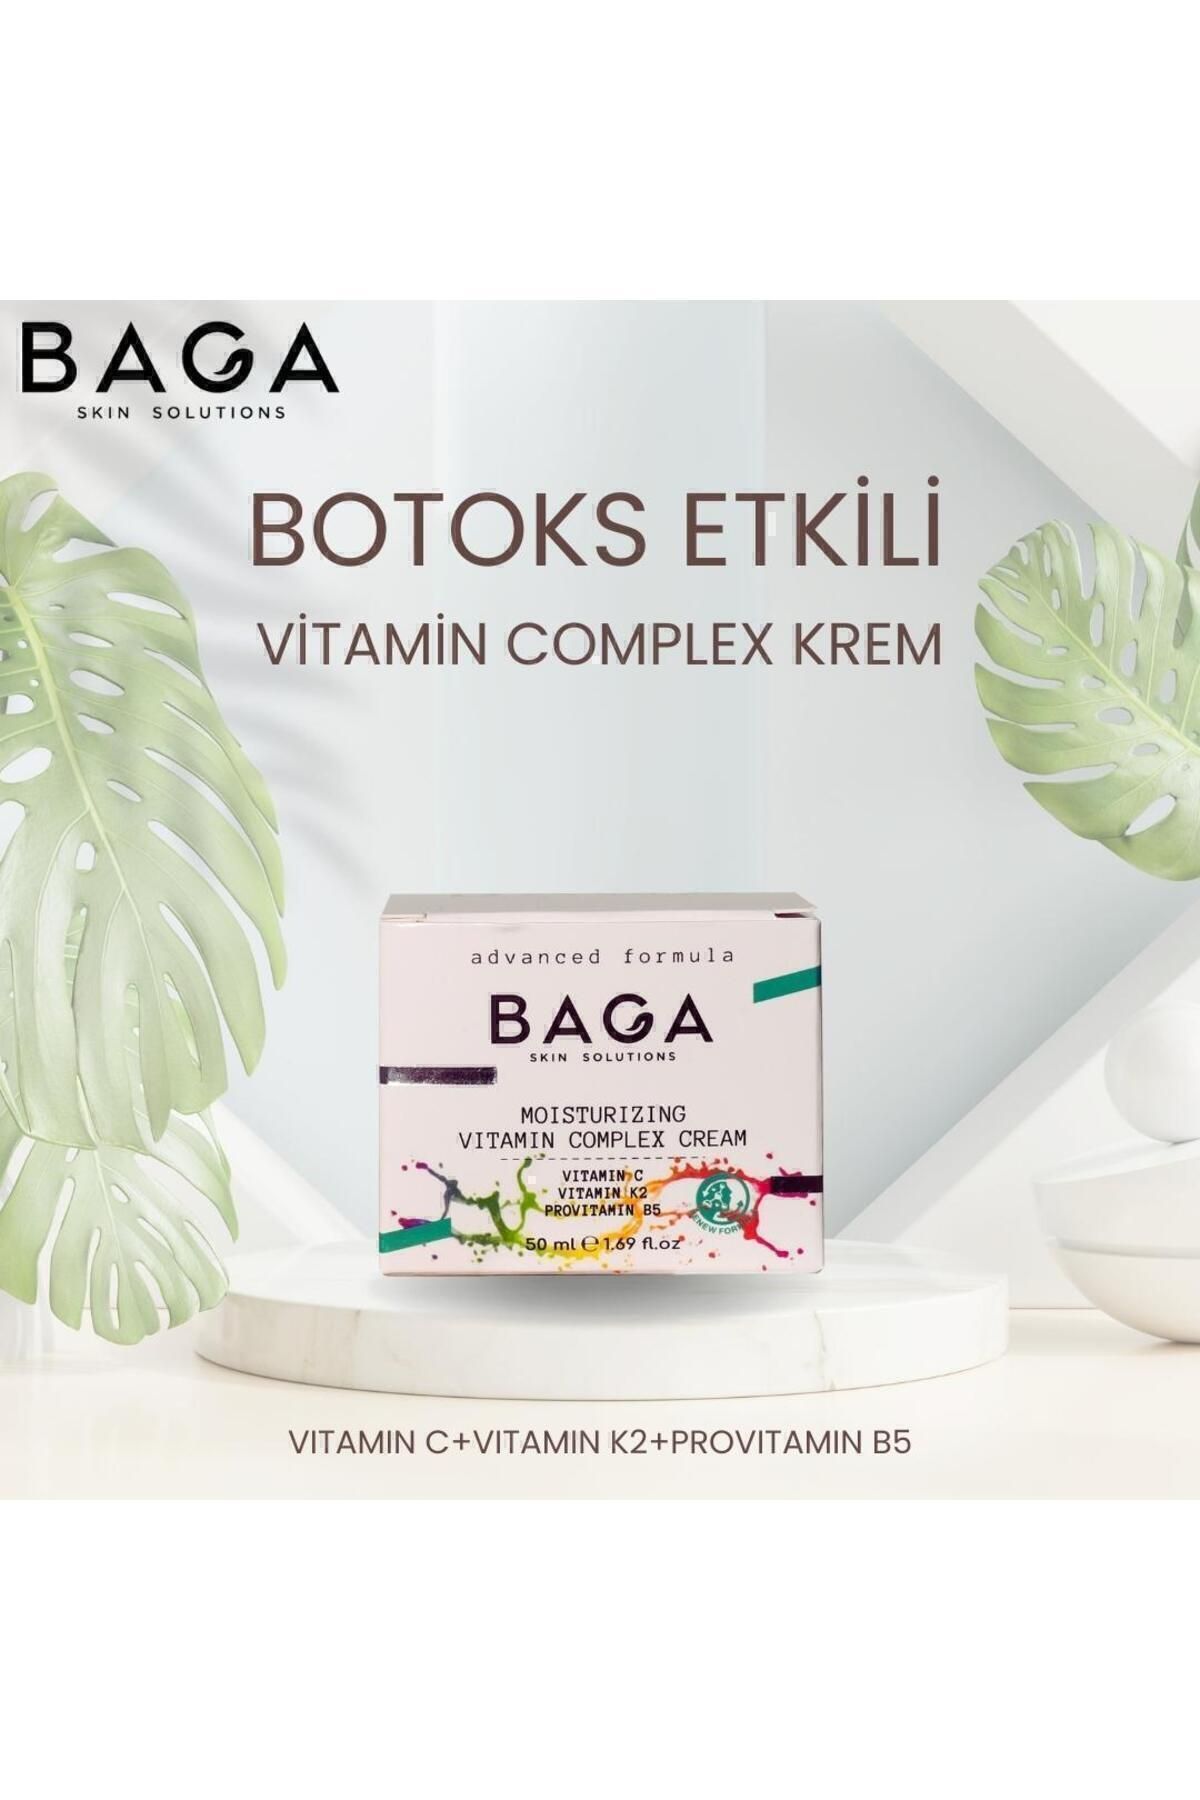 Baga Botoks Etkili Nemlendirici Vitamin Complex Krem